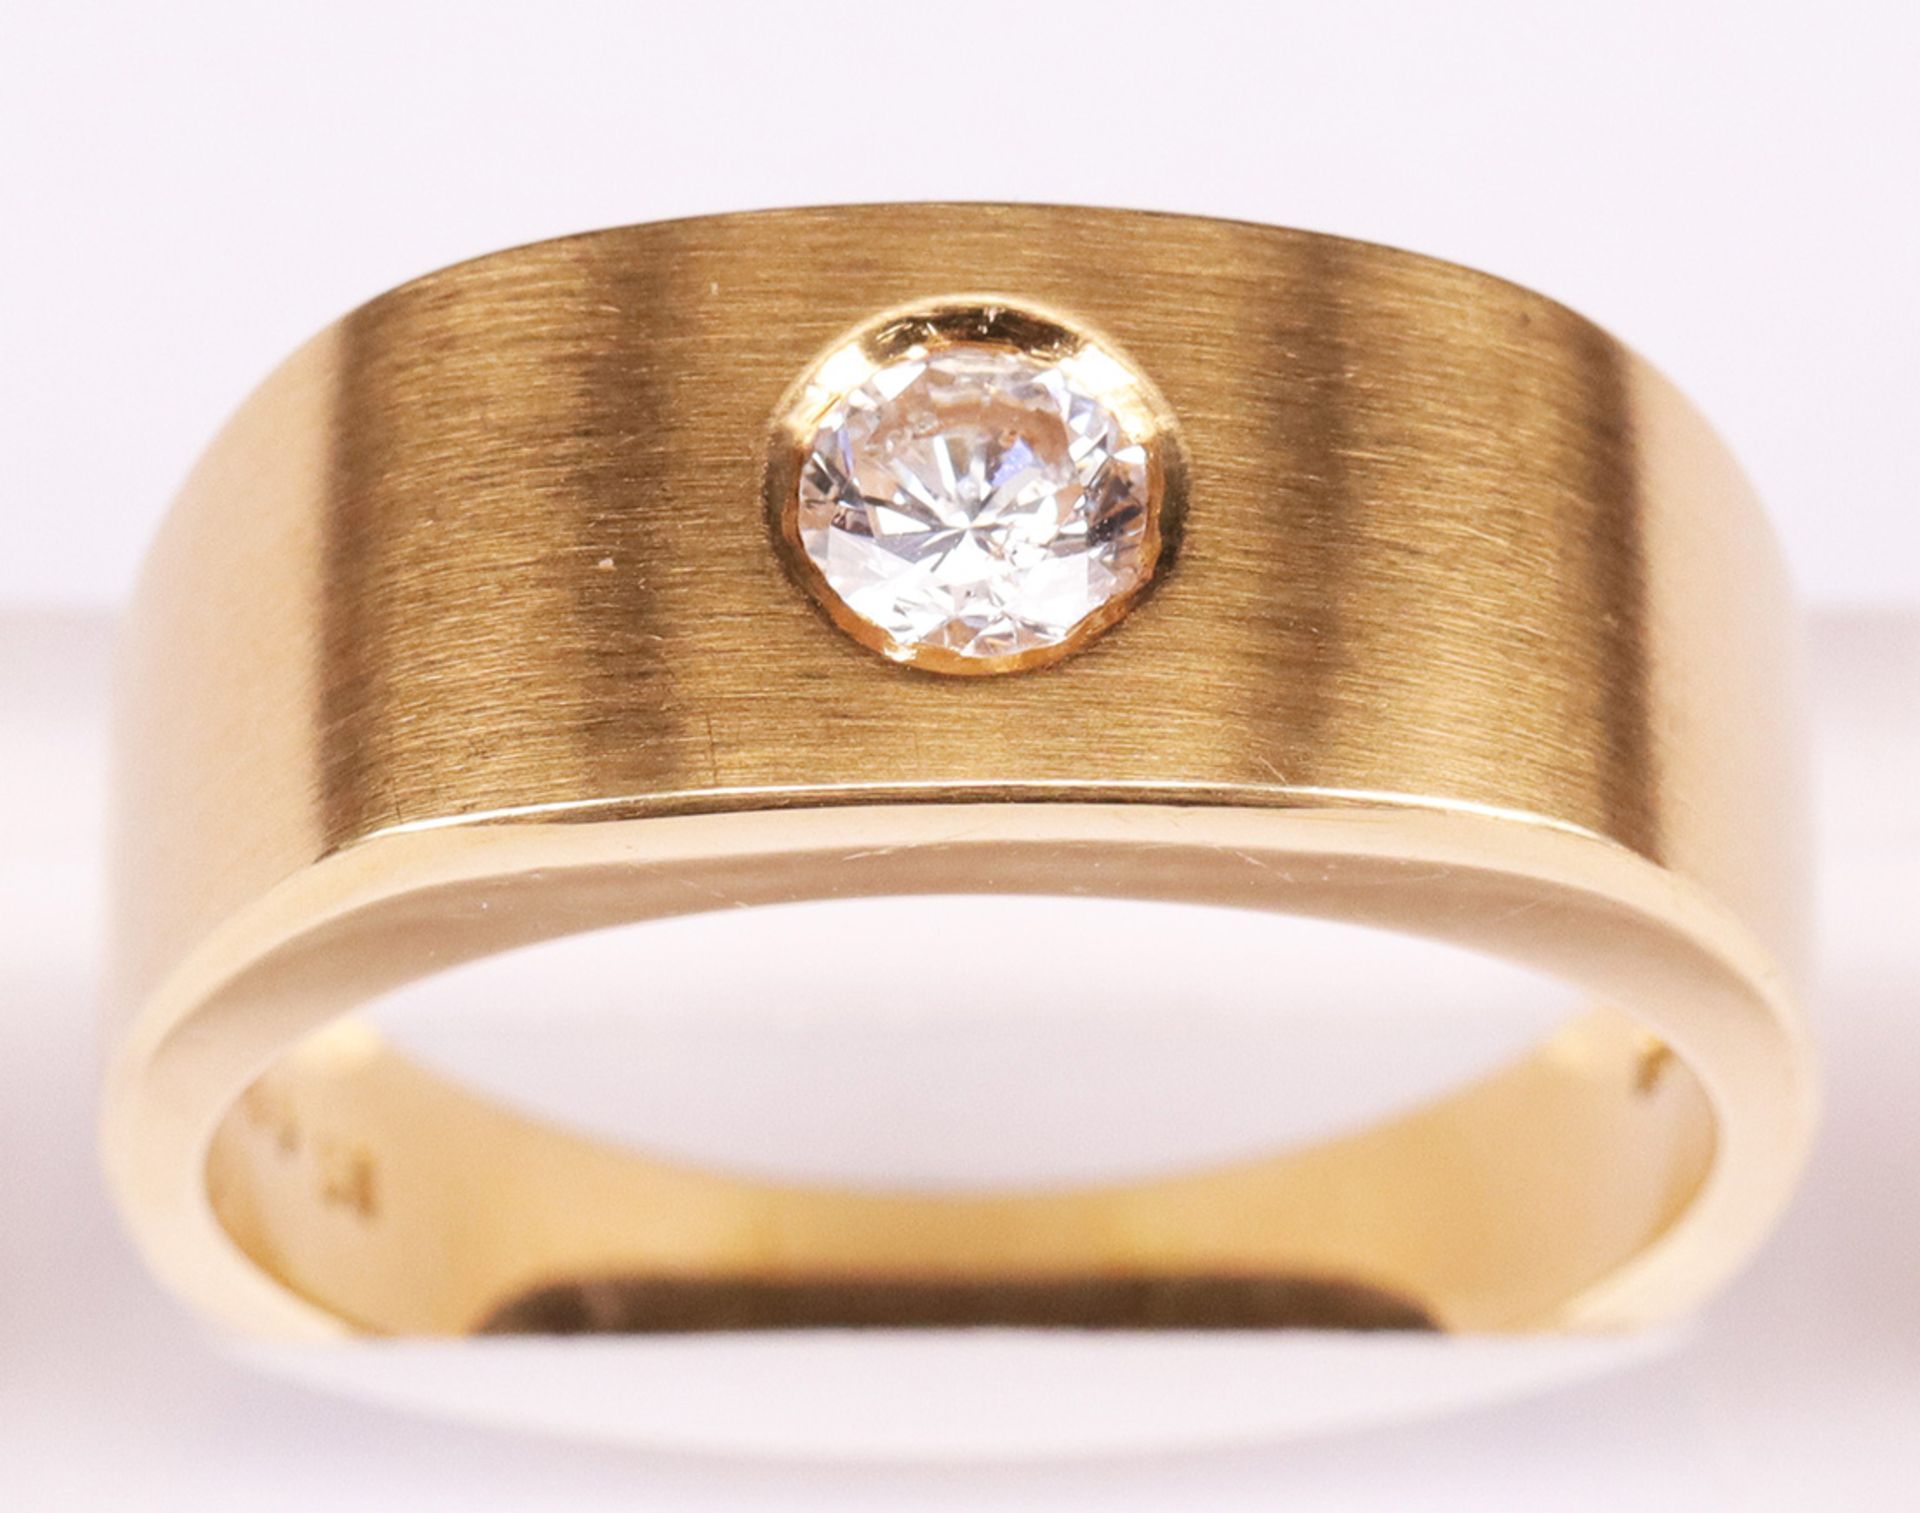 Breiter Ring, 750er GG, Brilliant 0,49 ct, si-p1, RG65, 17,32 g - Image 5 of 5